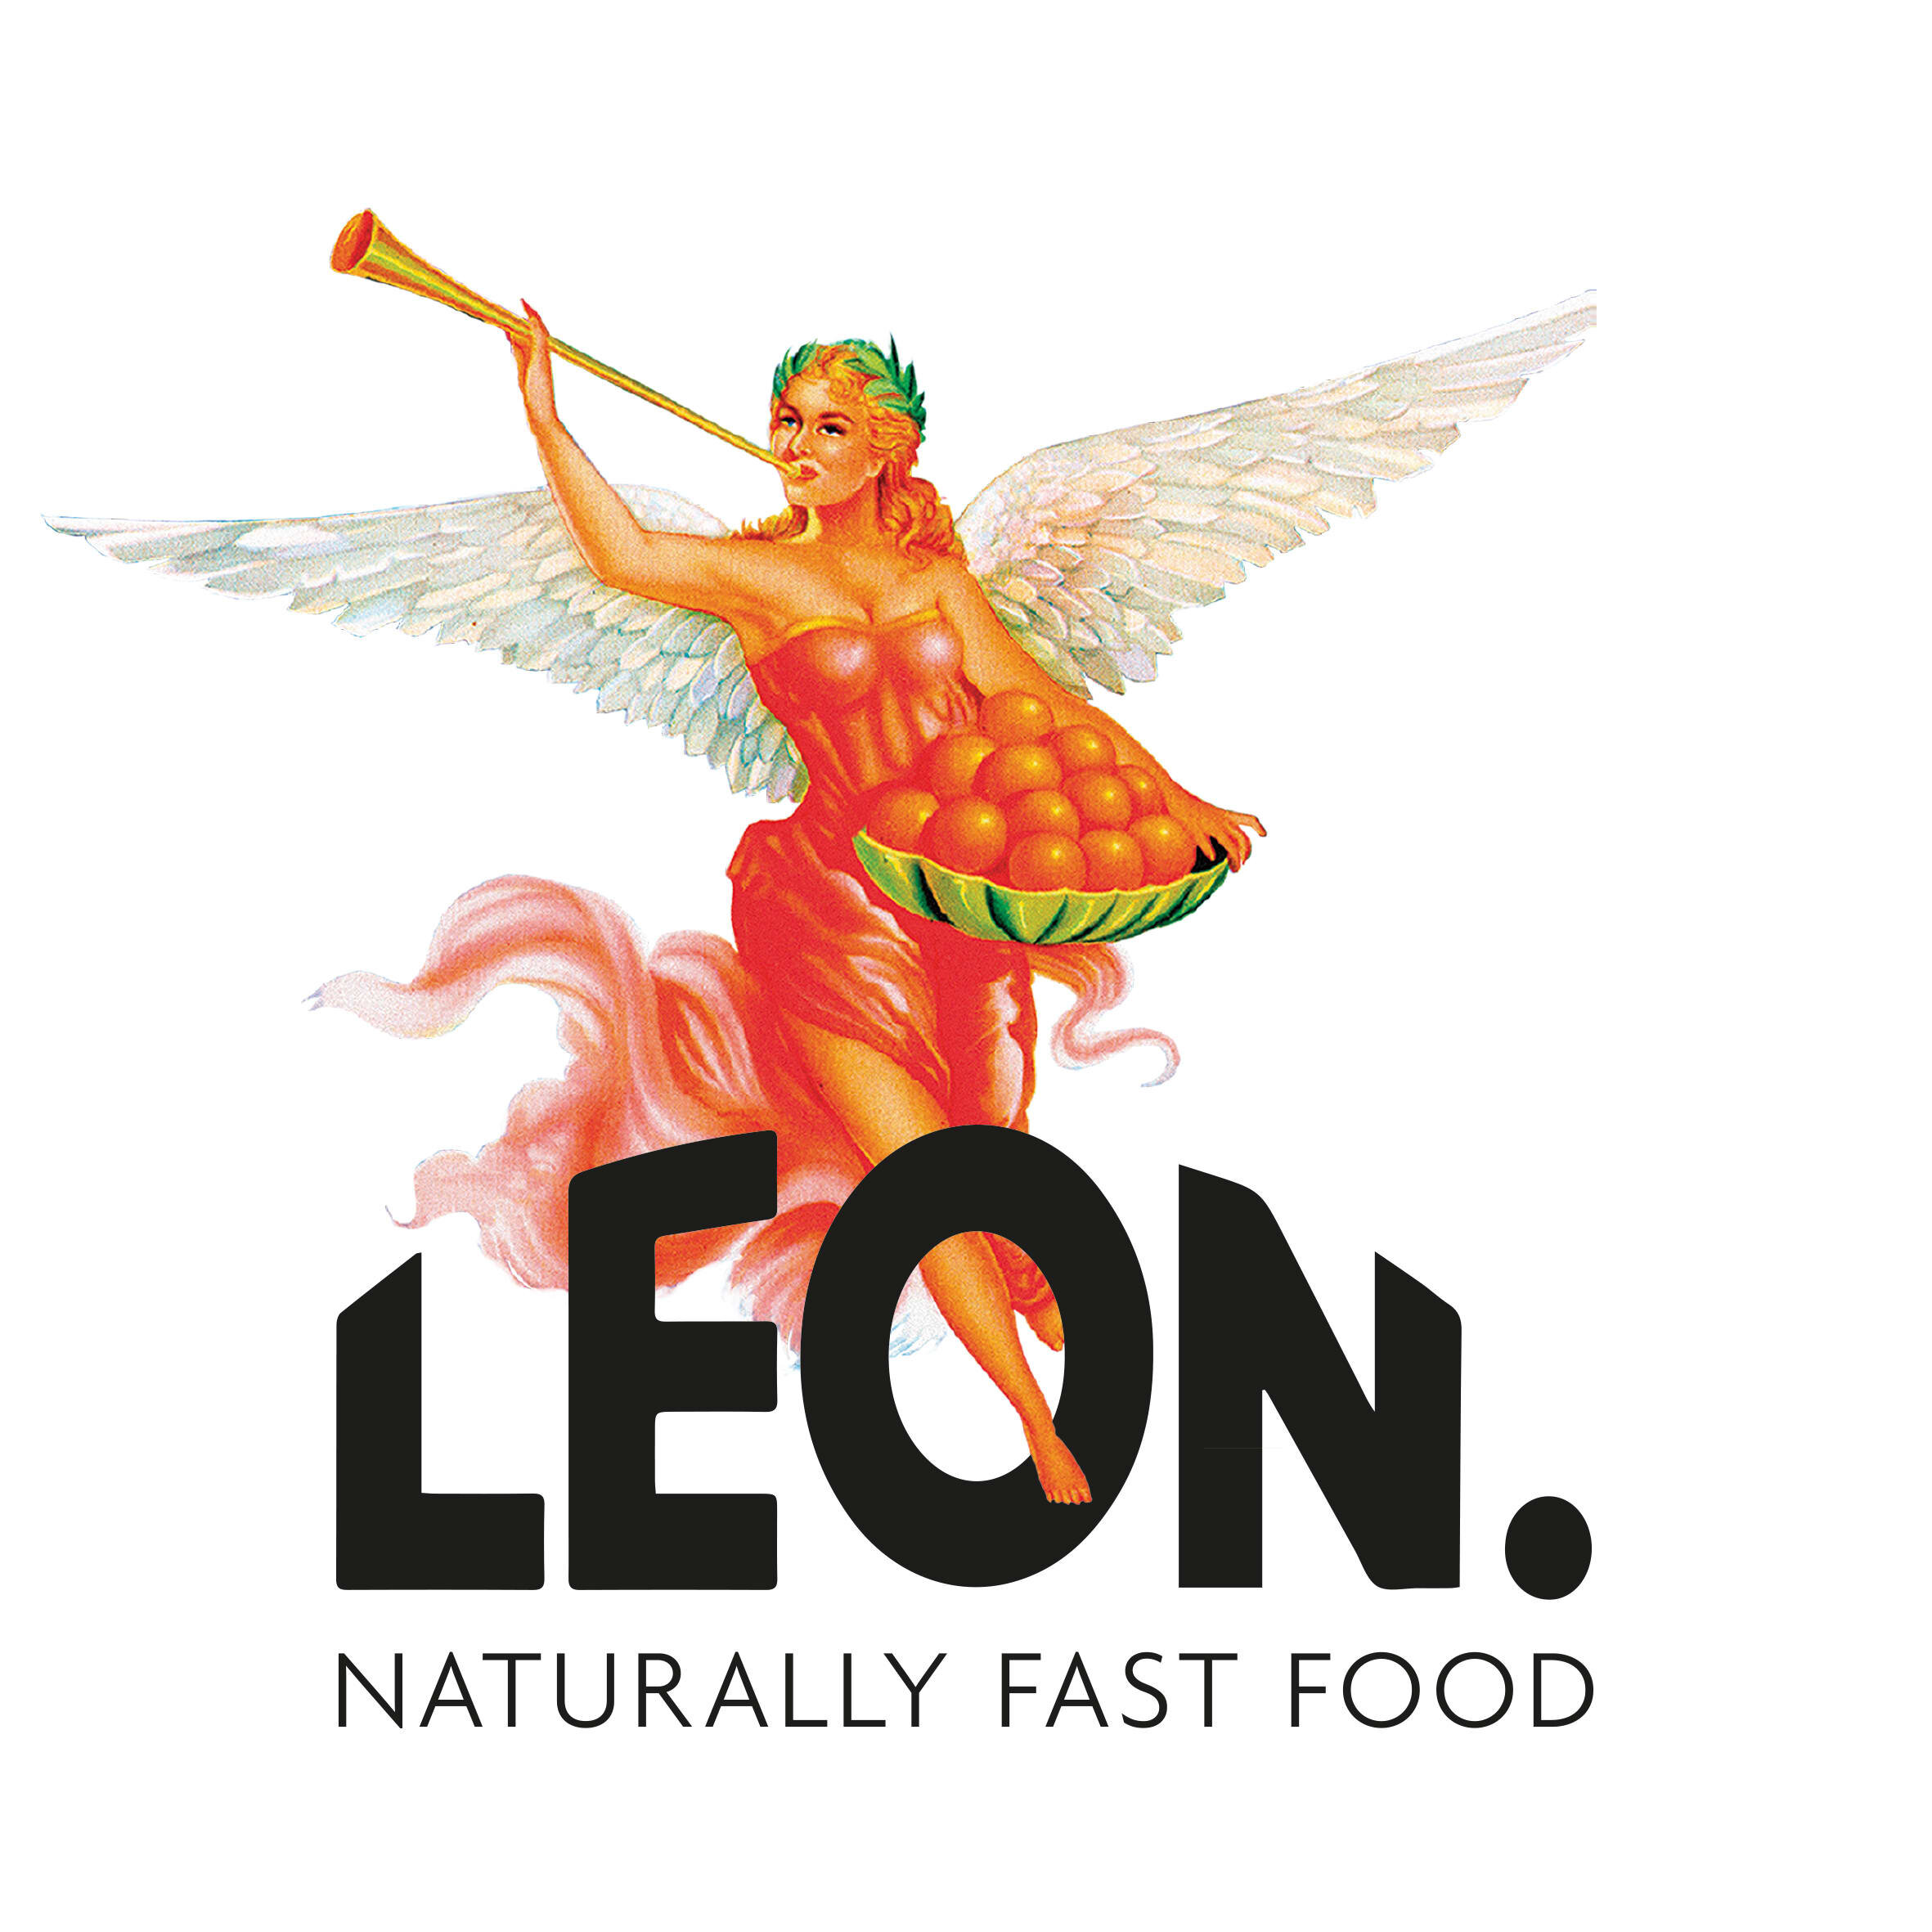 leon logo.jpeg